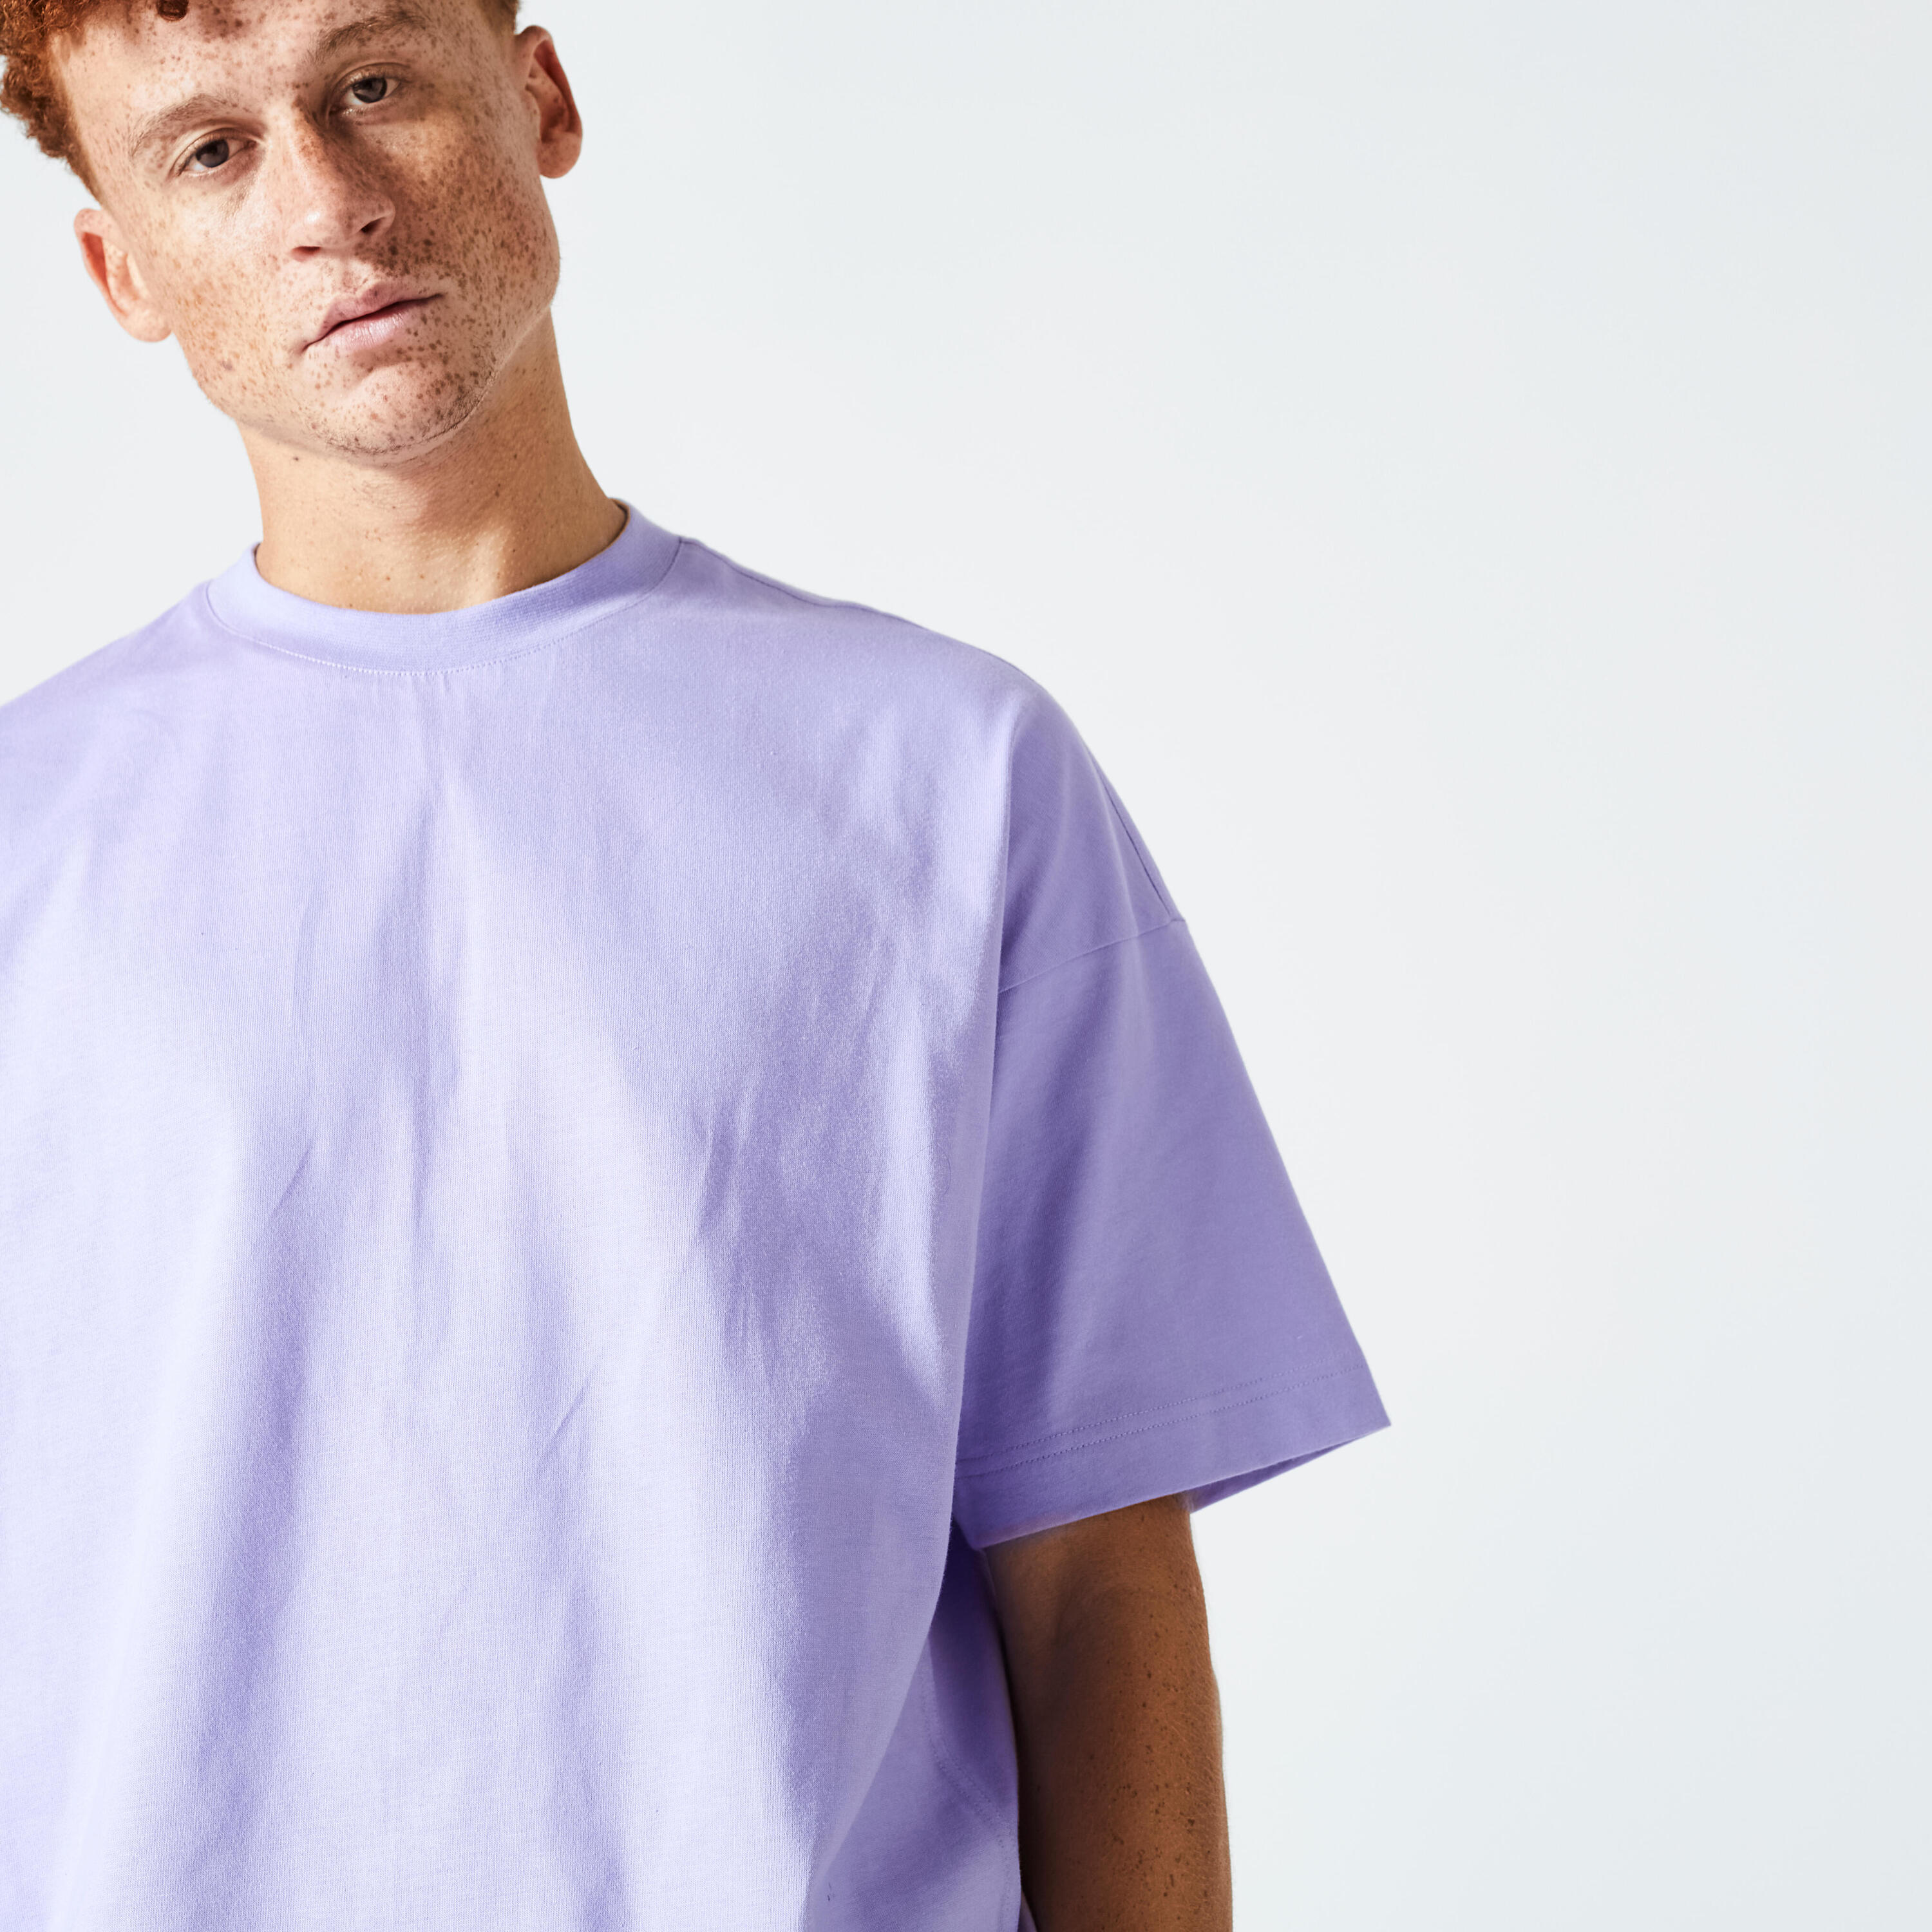 Men's Loose-Fit Fitness T-Shirt 520 - Neon Purple 4/5